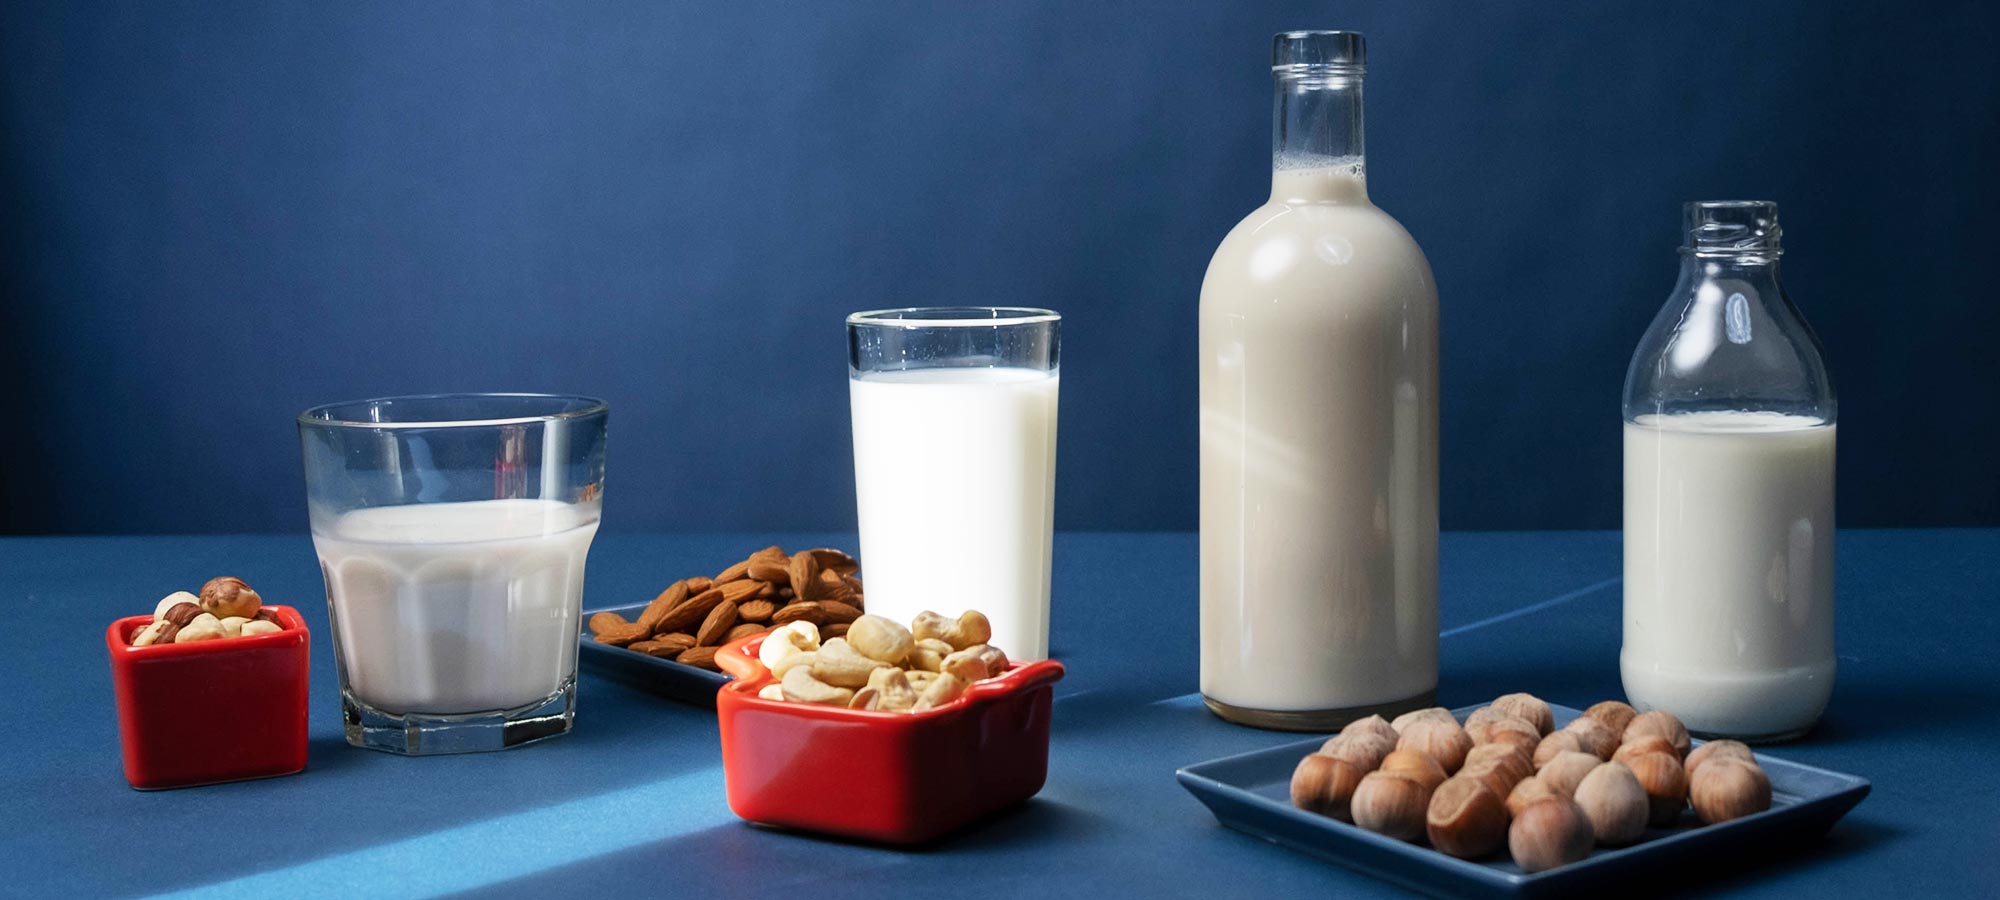 alimentazione estate frutta secca benefici bevande vegetali late di mandorla latte di noci ricetta latte di anacardi latte di nocciole